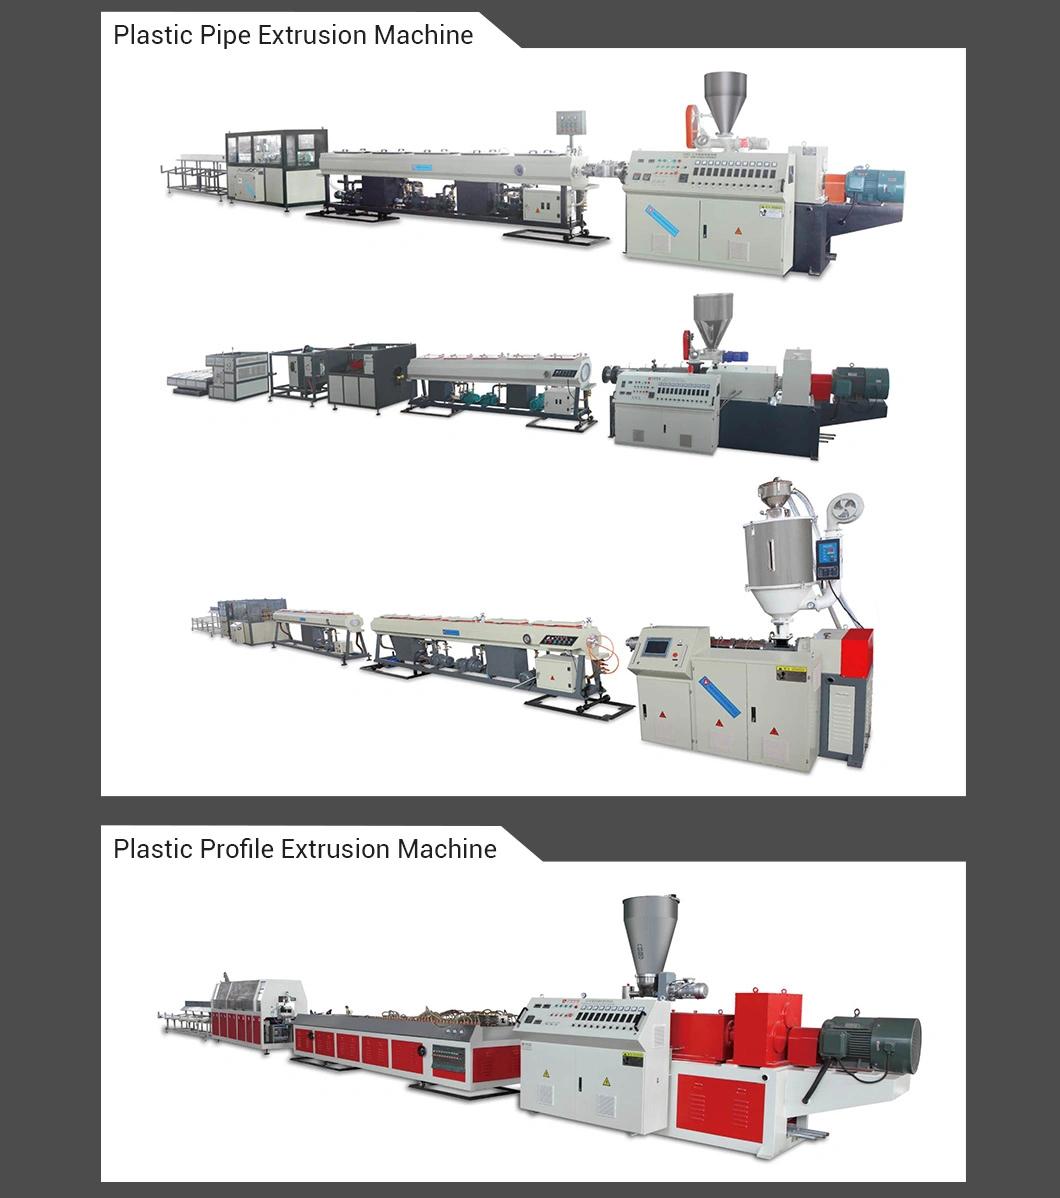 Yatong Sj100 Film Recycling Machine / Film Pelletizing Machine / Granulating Line